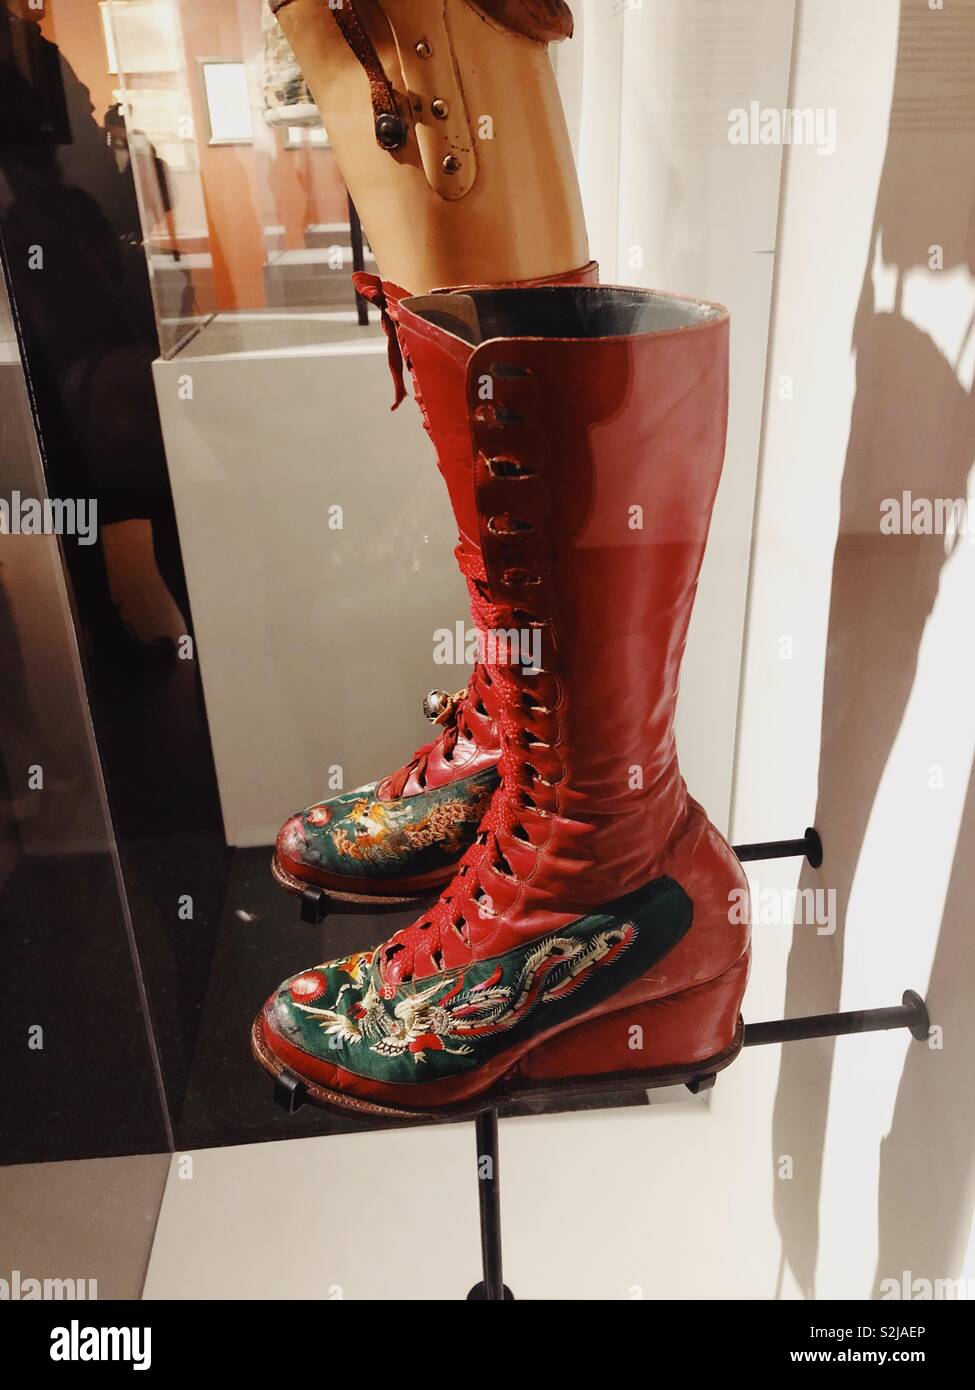 Frida Kalho's stivali, presentano al Brooklyn Museum di New York, 2019. Foto Stock